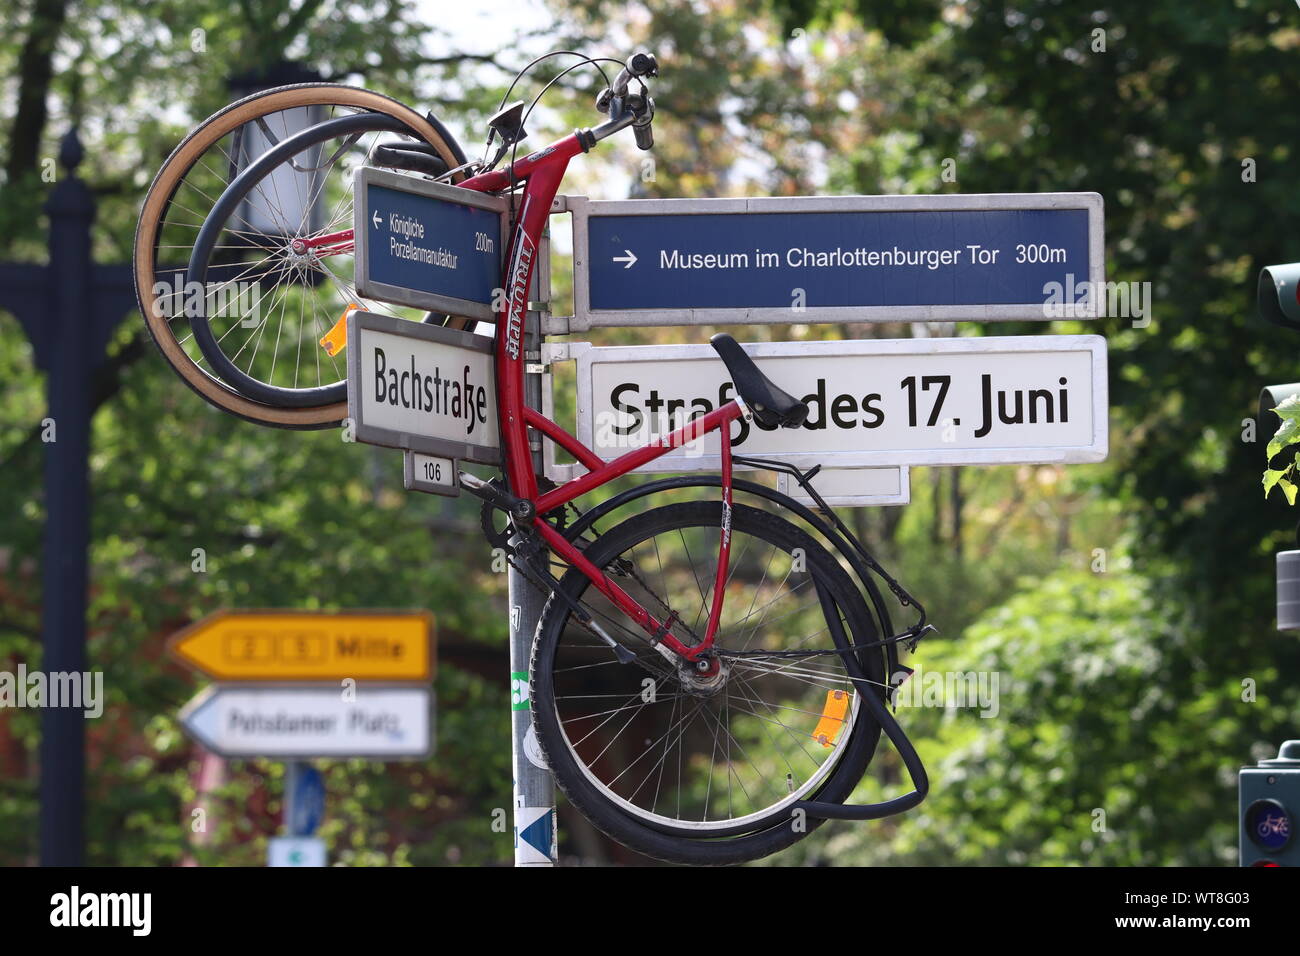 Fahrrad hängt über ein Straßenschild in Berlin, Straße des 17. Juni * Bicycle hangs over a road sign in Berlin, street of June 17th Stock Photo